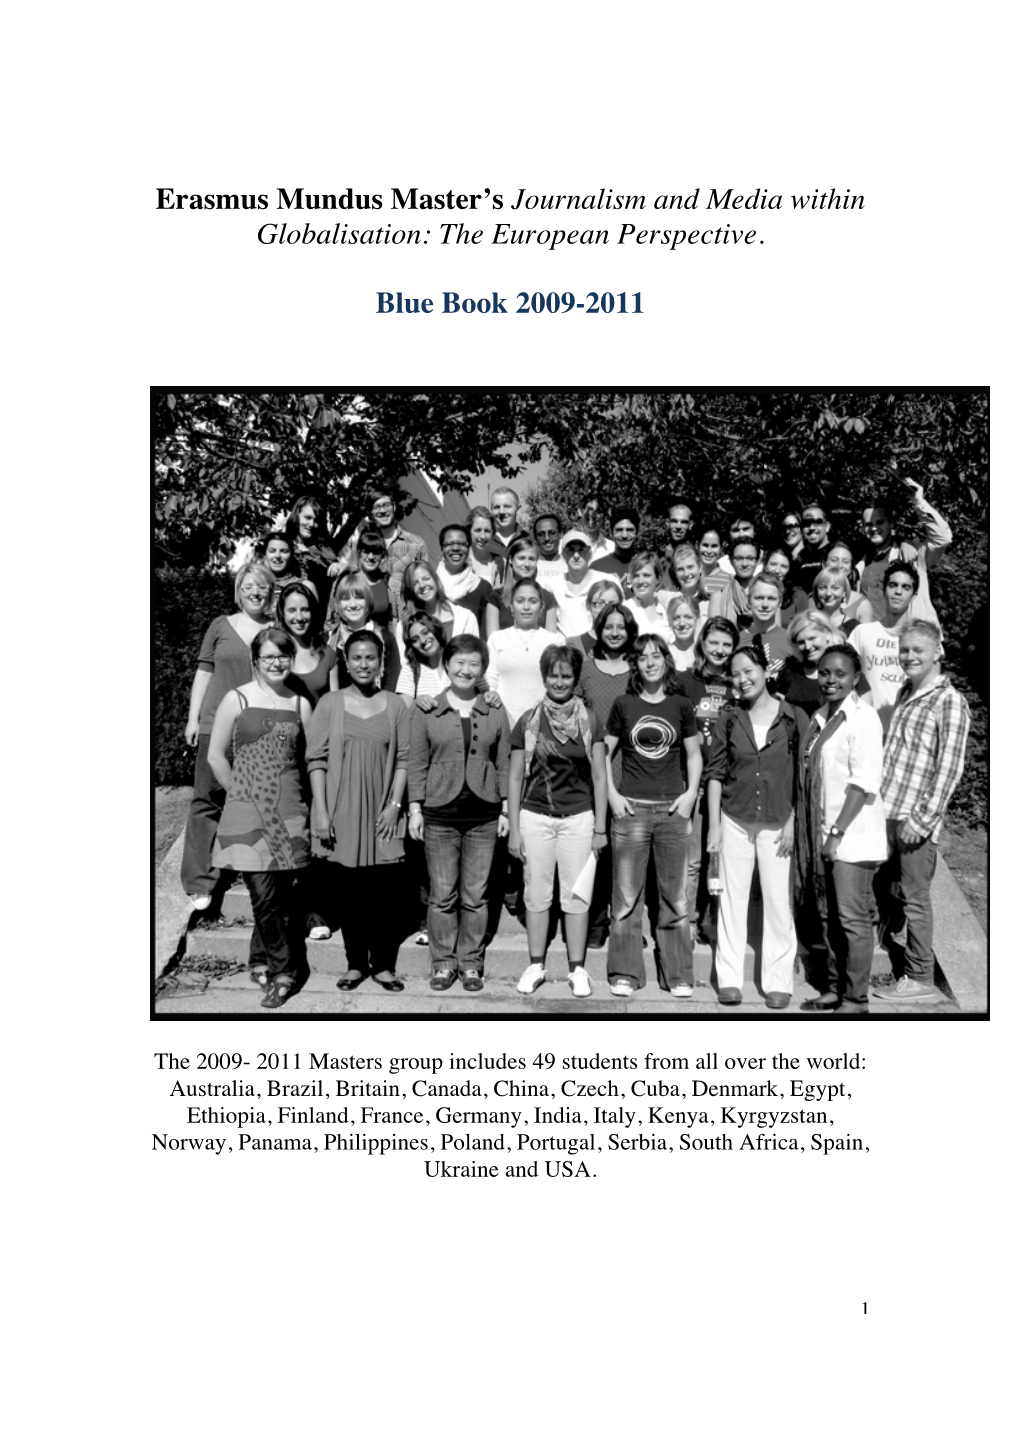 Erasmus Mundus Master's Journalism and Media Within Globalisation: The